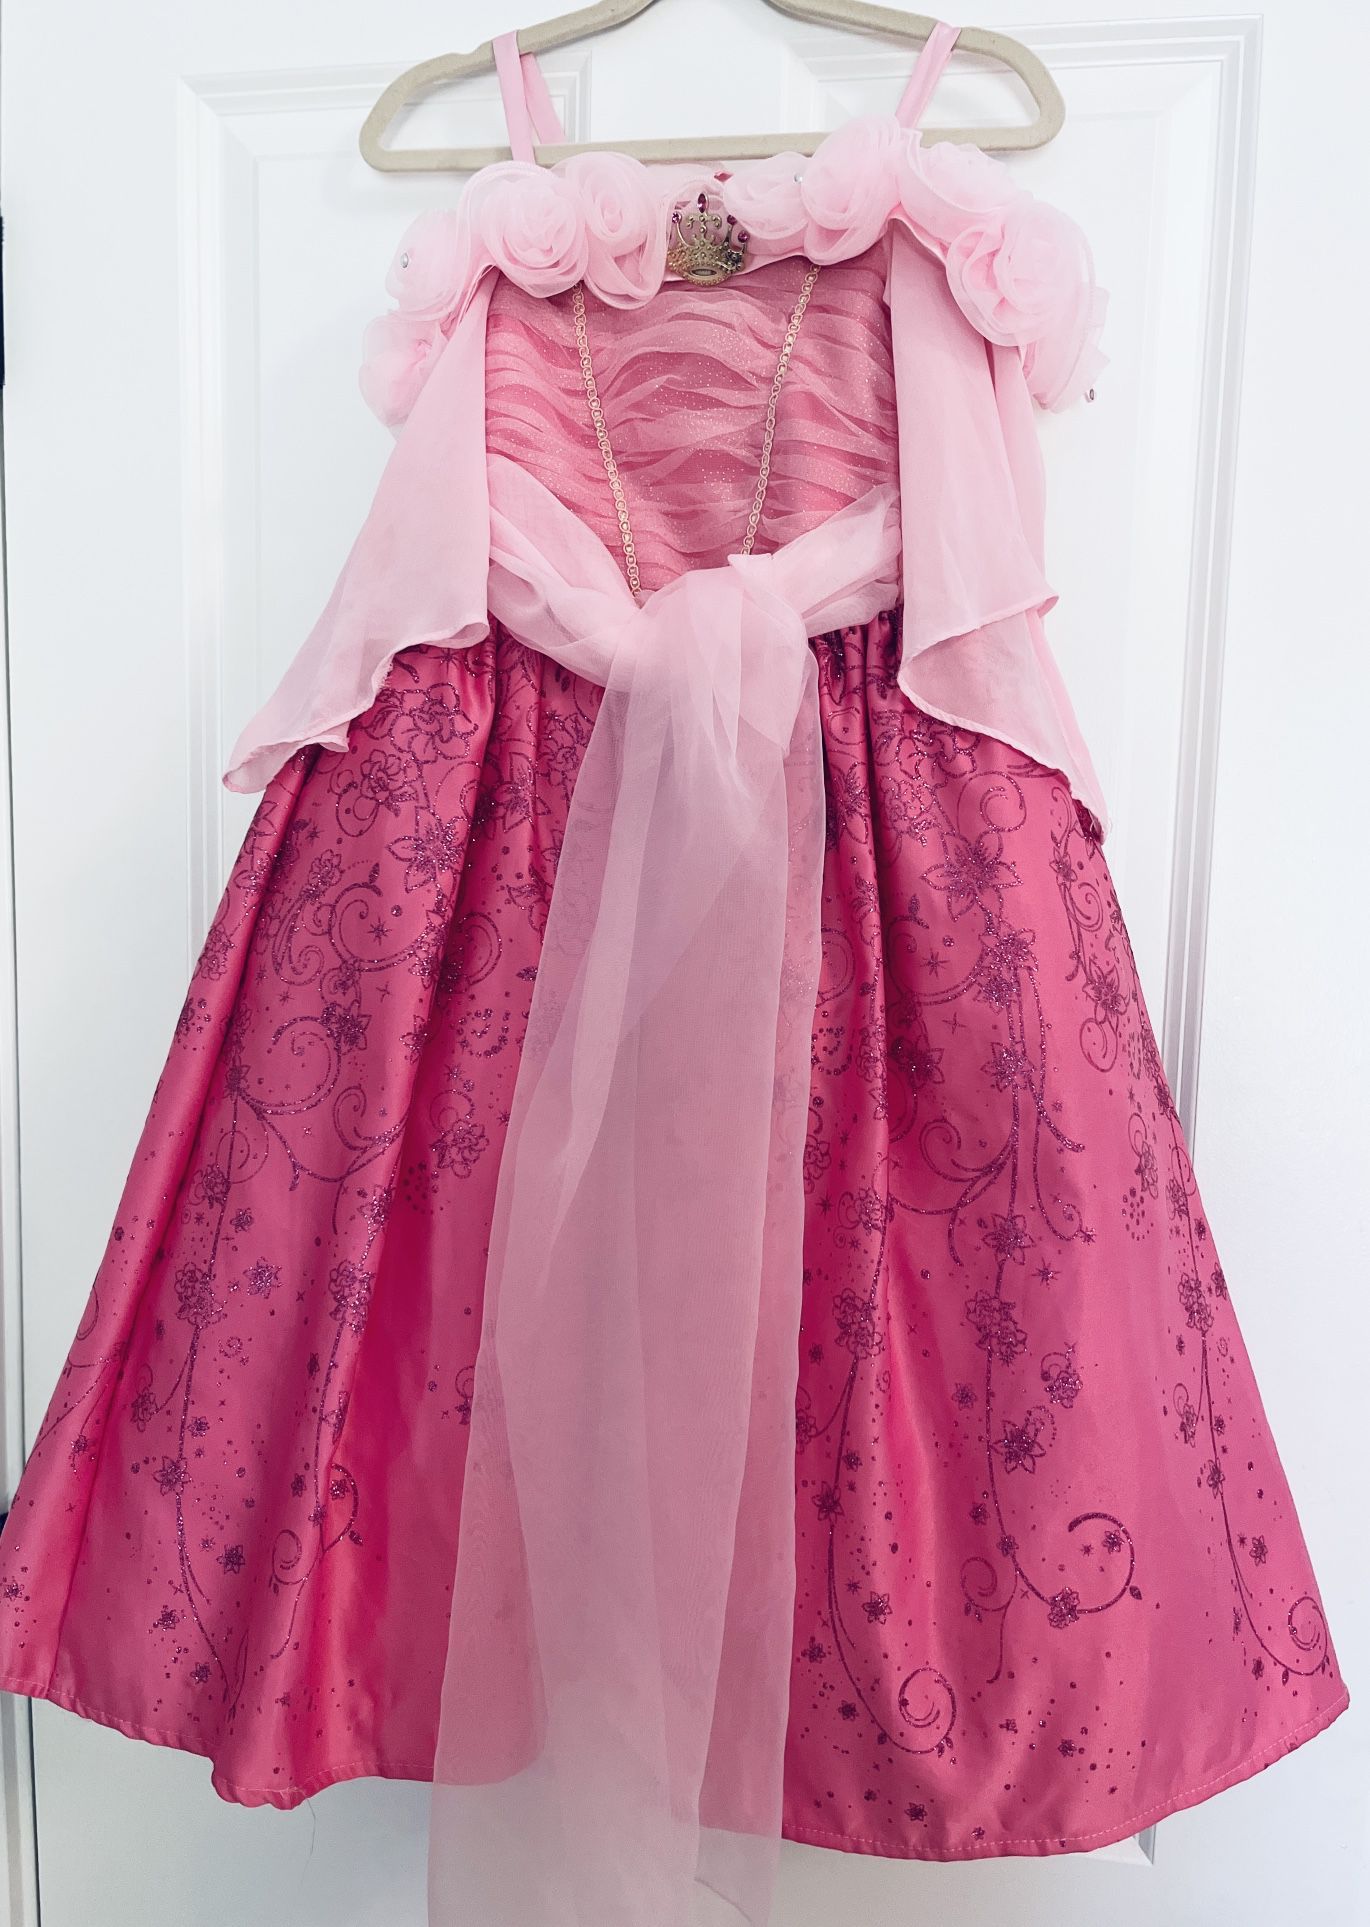 Disney Princess Dress